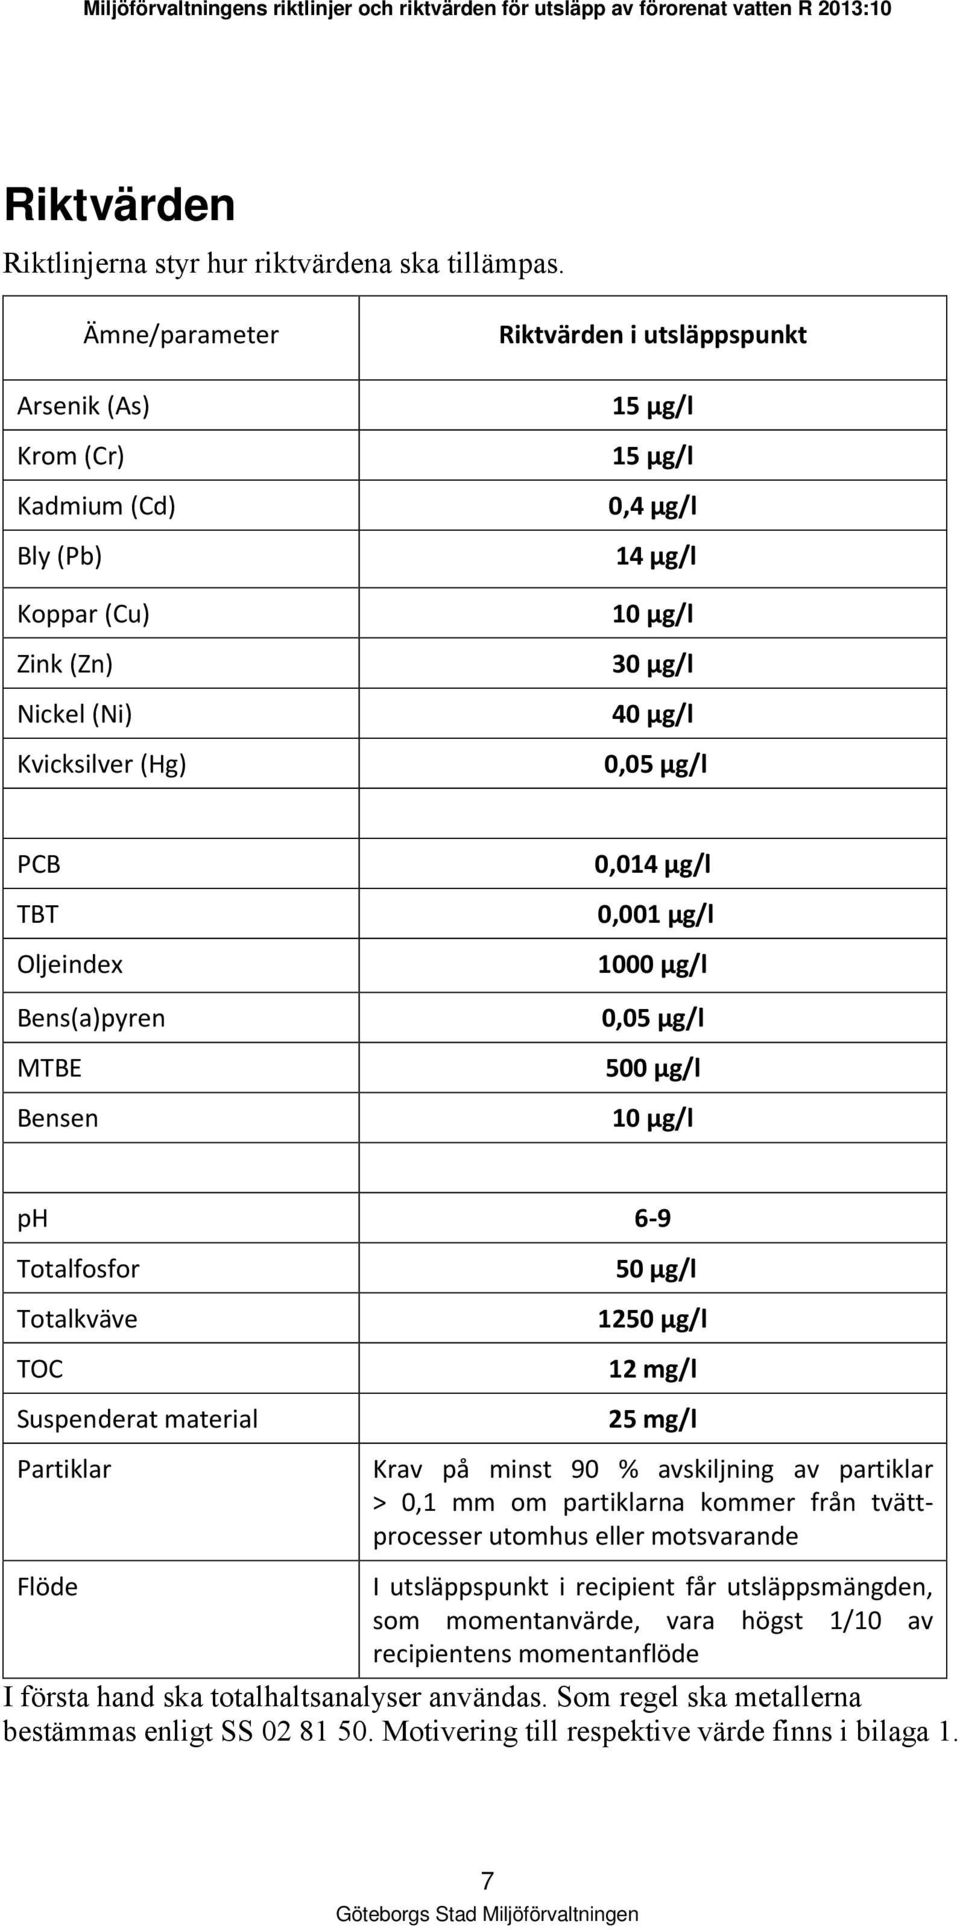 µg/l PCB TBT Oljeindex Bens(a)pyren MTBE Bensen 0,014 µg/l 0,001 µg/l 1000 µg/l 0,05 µg/l 500 µg/l 10 µg/l ph 6-9 Totalfosfor Totalkväve TOC Suspenderat material Partiklar 50 µg/l 1250 µg/l 12 mg/l